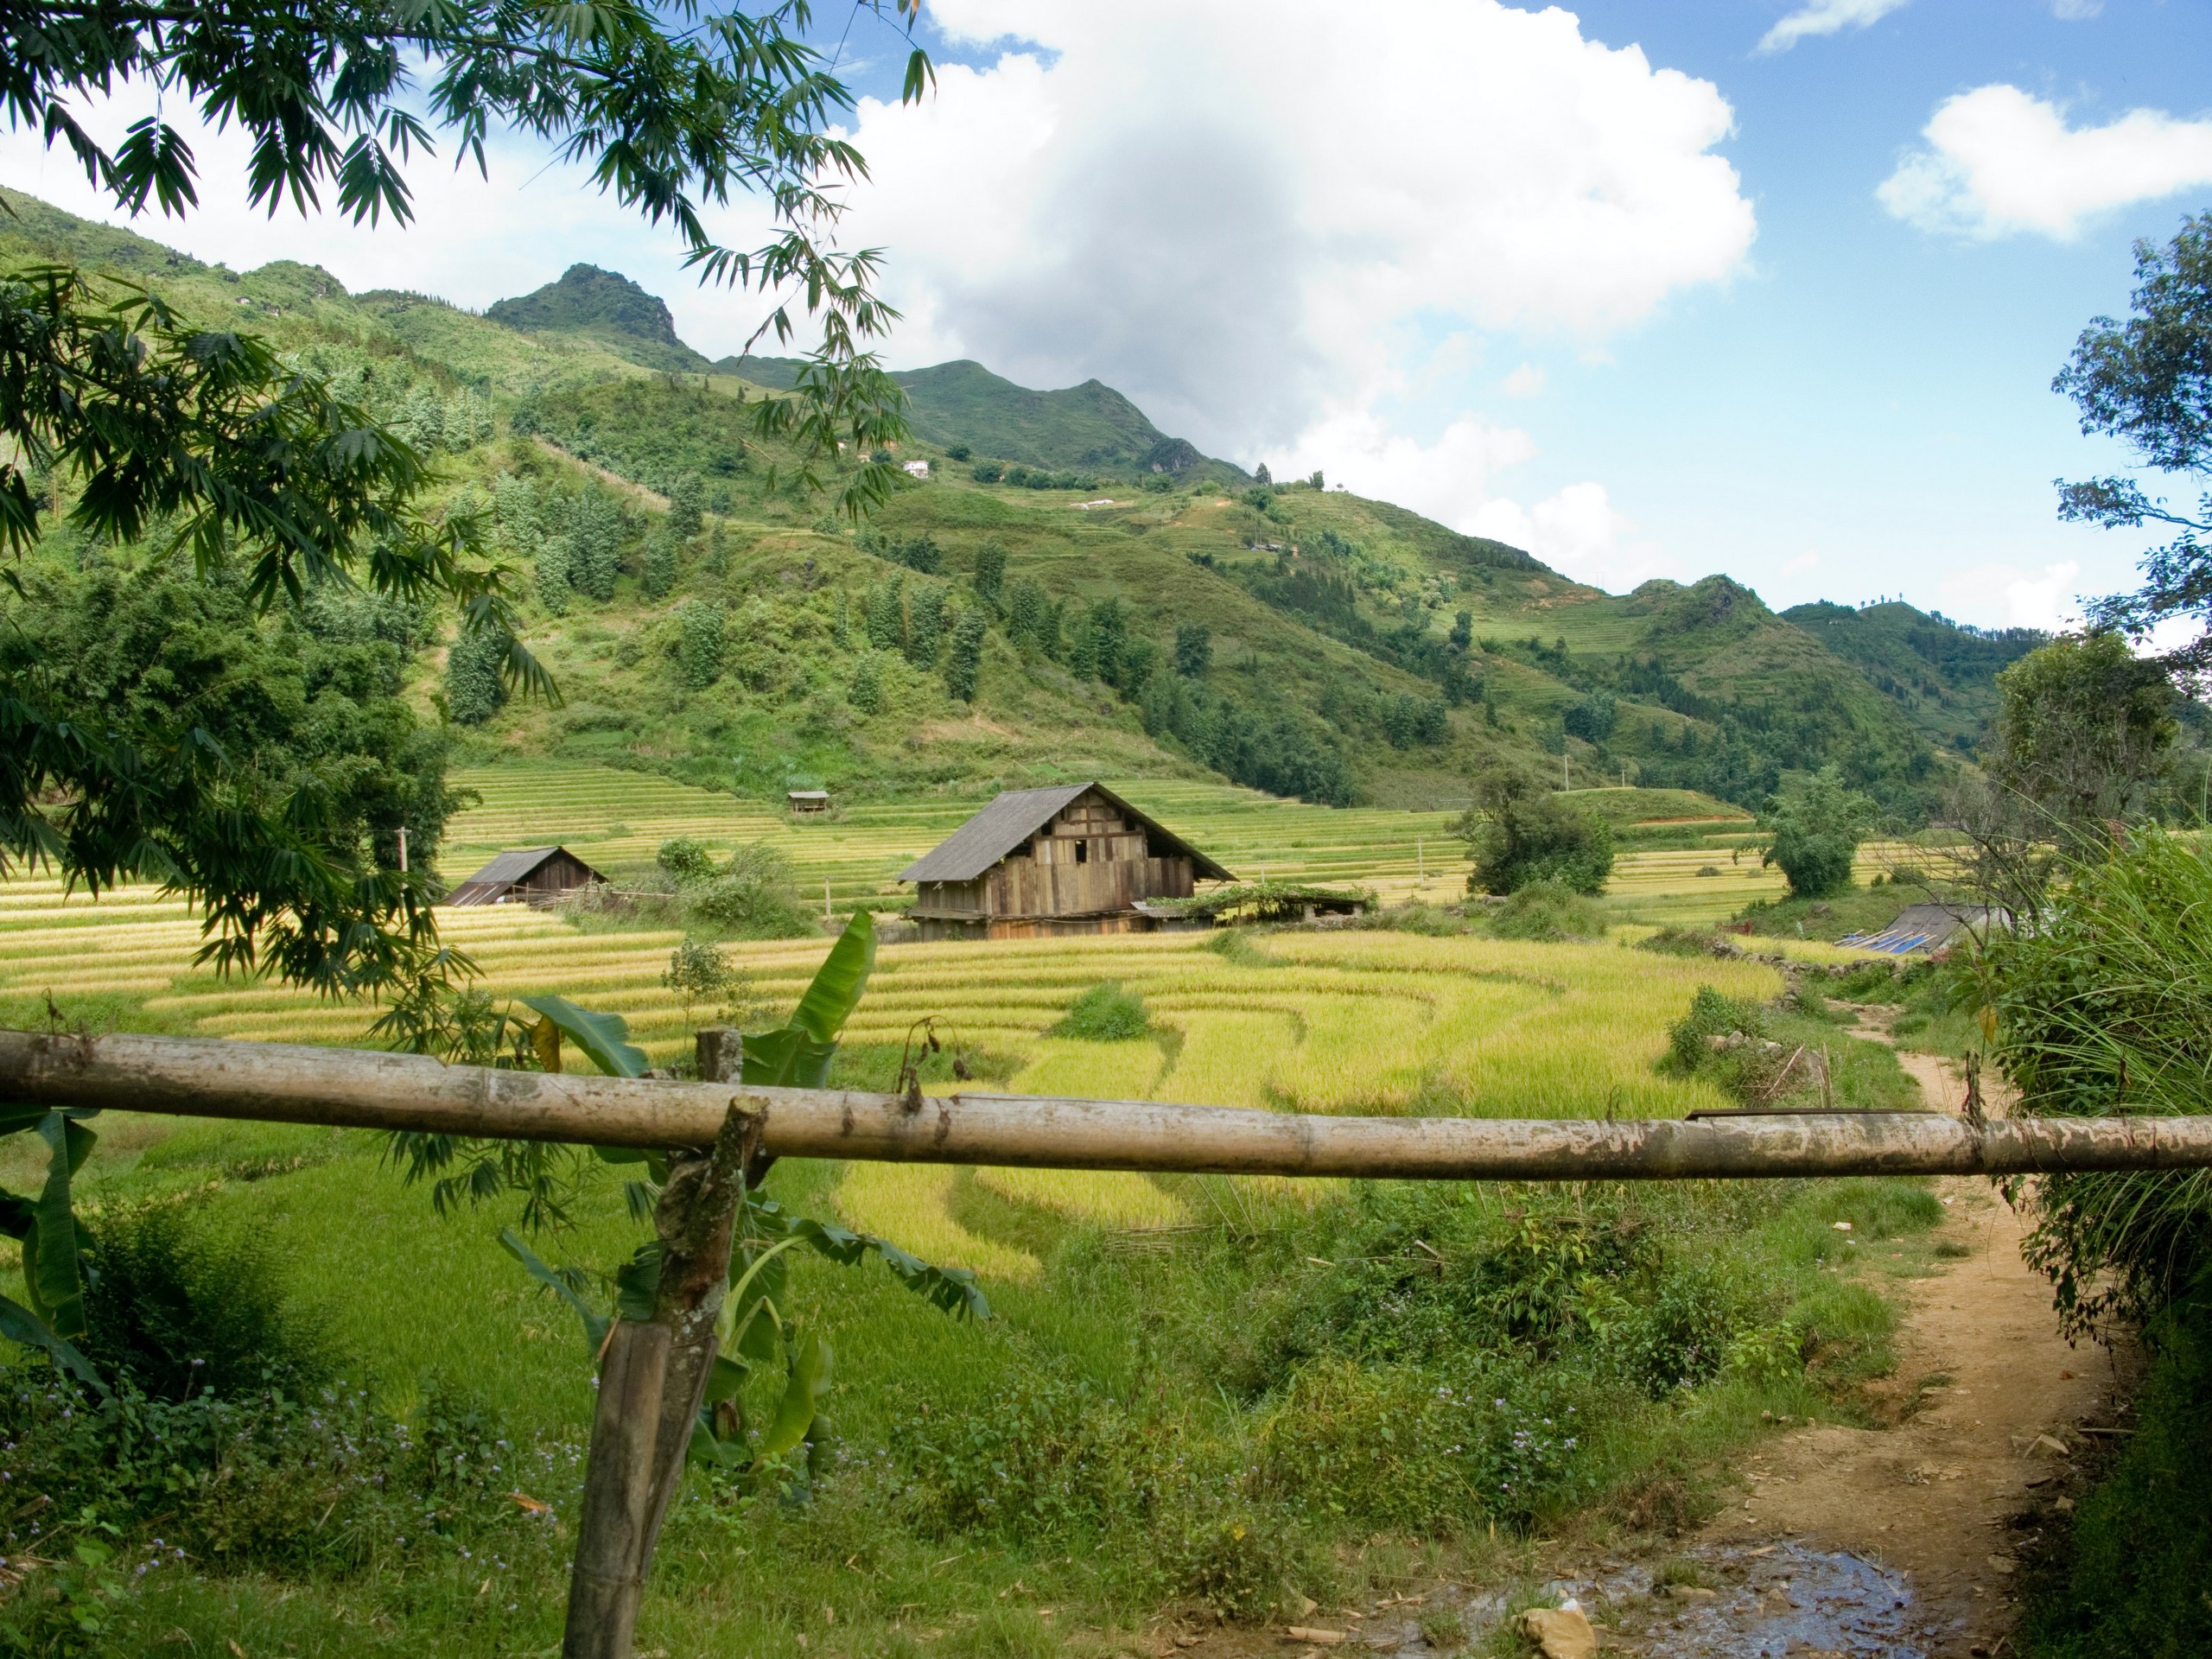 Vietnam's countryside